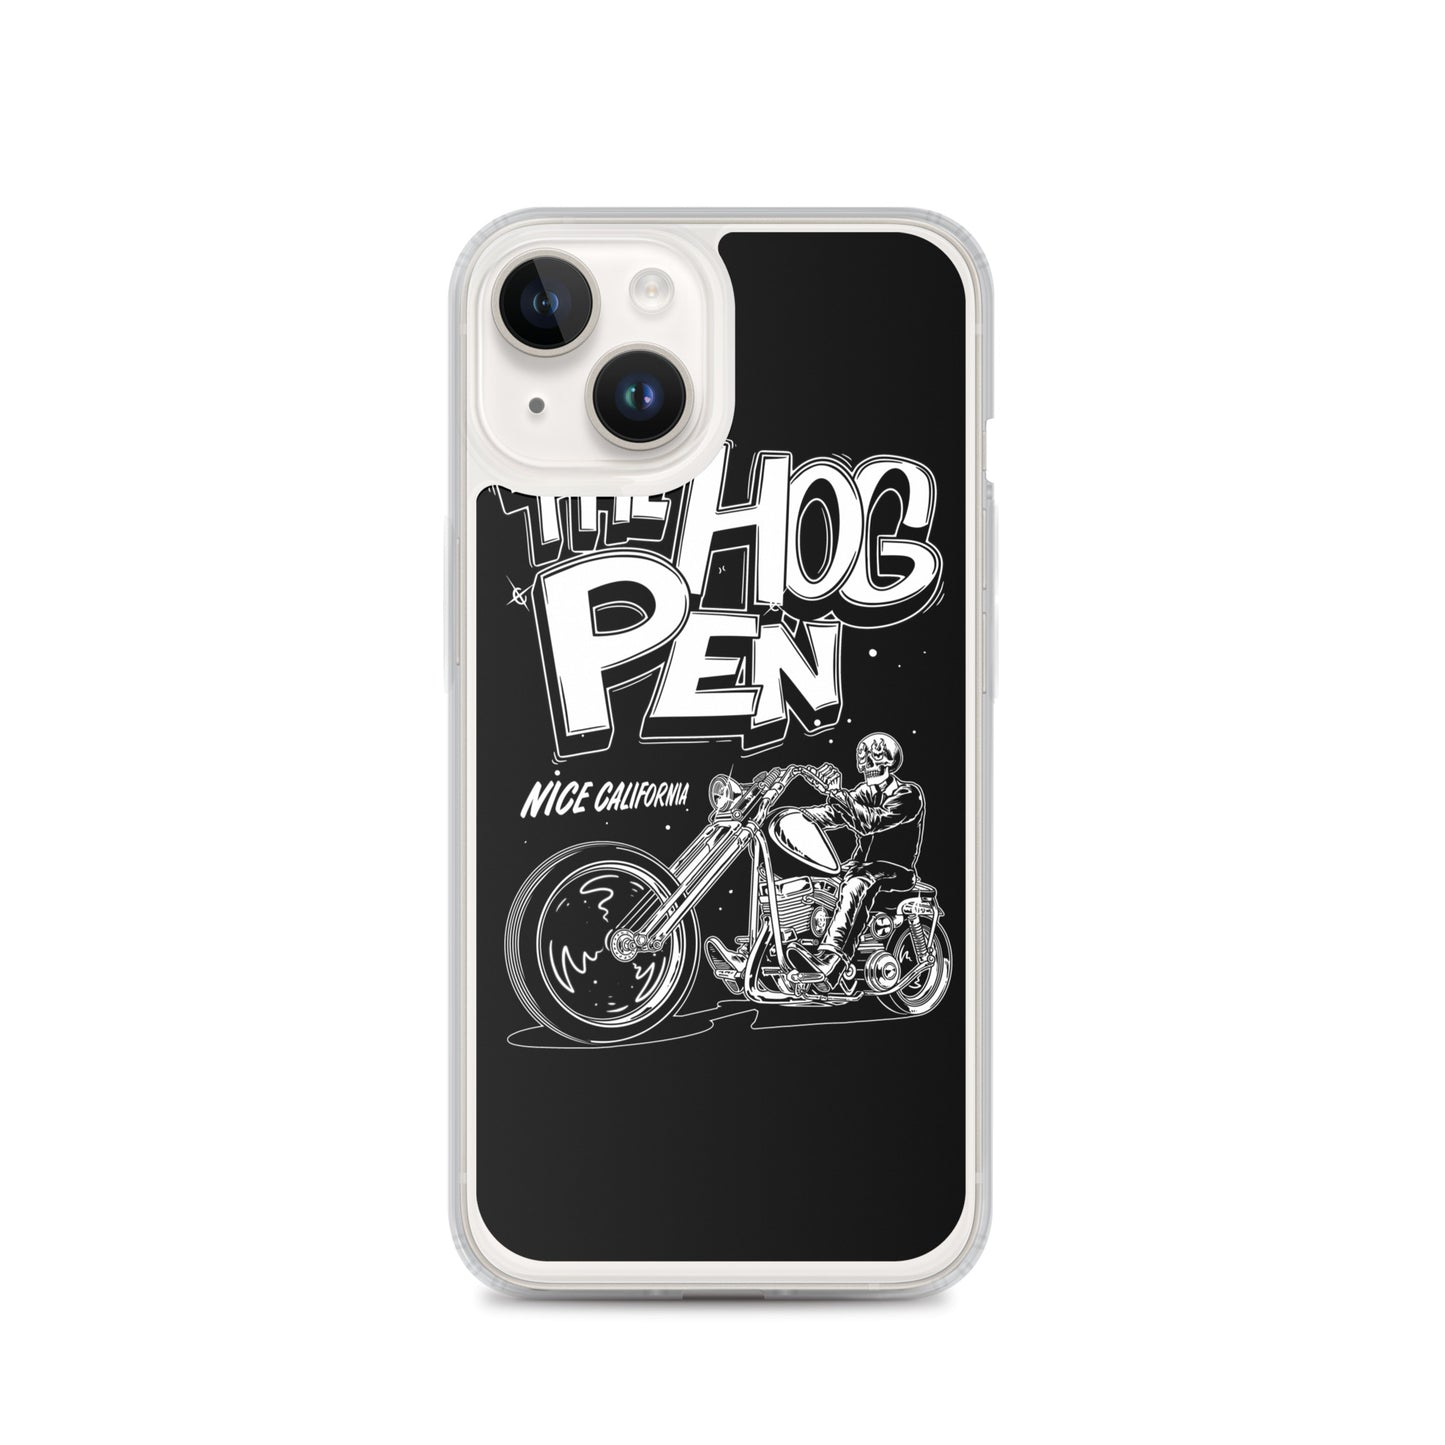 Hog Pen Case for iPhone®